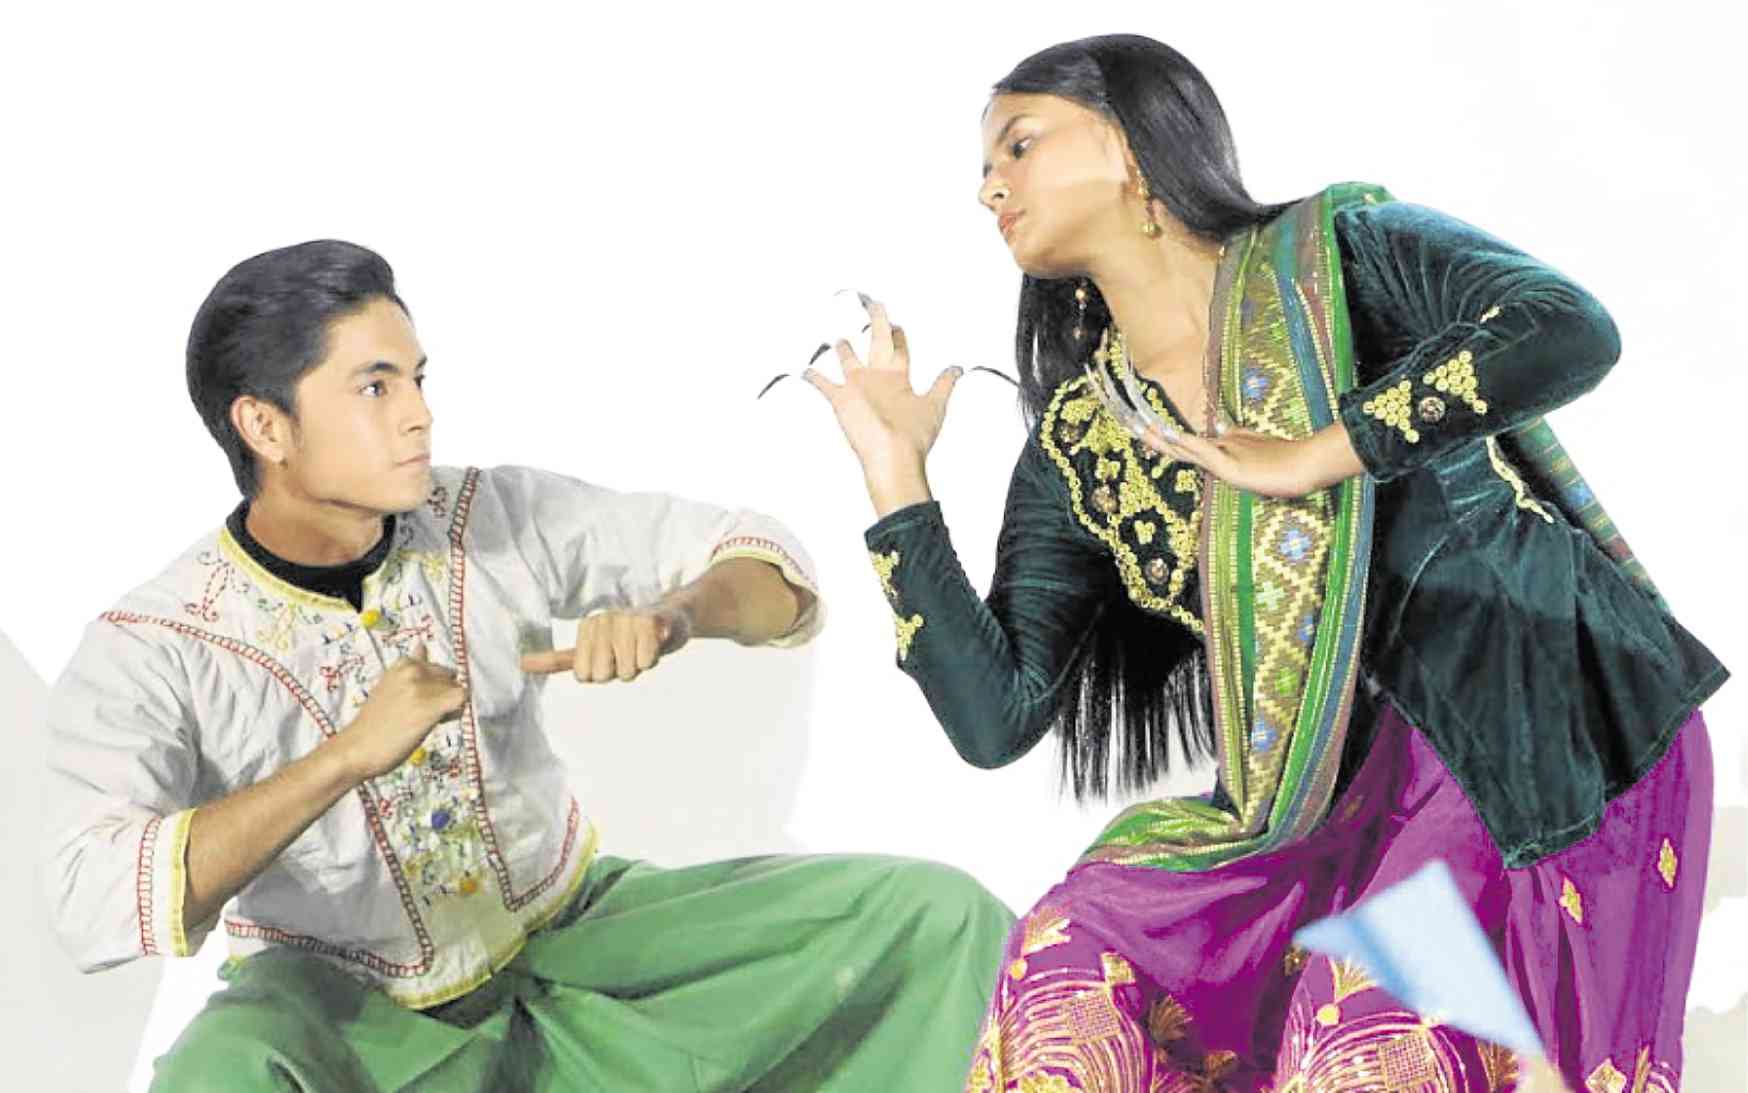 Bianca Umali’s new TV series shatters stereotype of Badjao as mere beggars